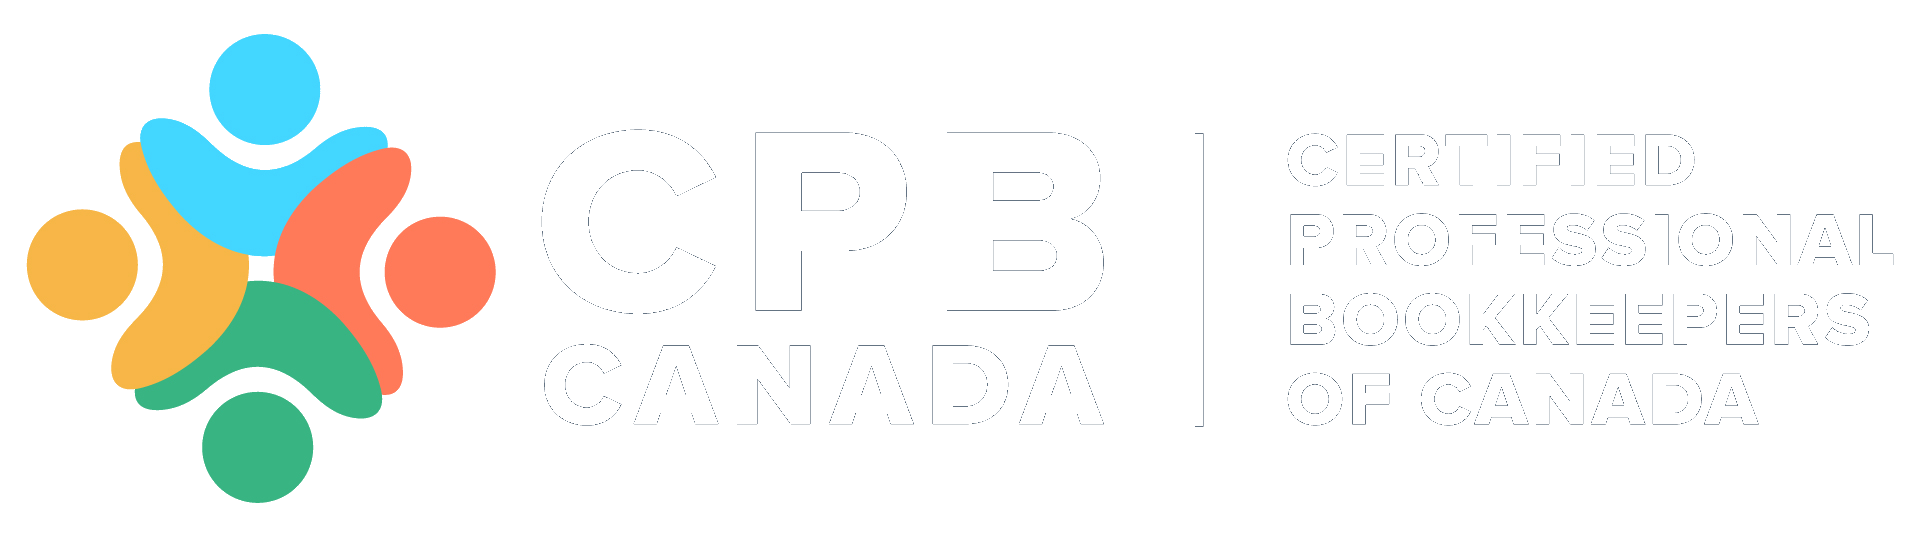 CPB Canada Logo